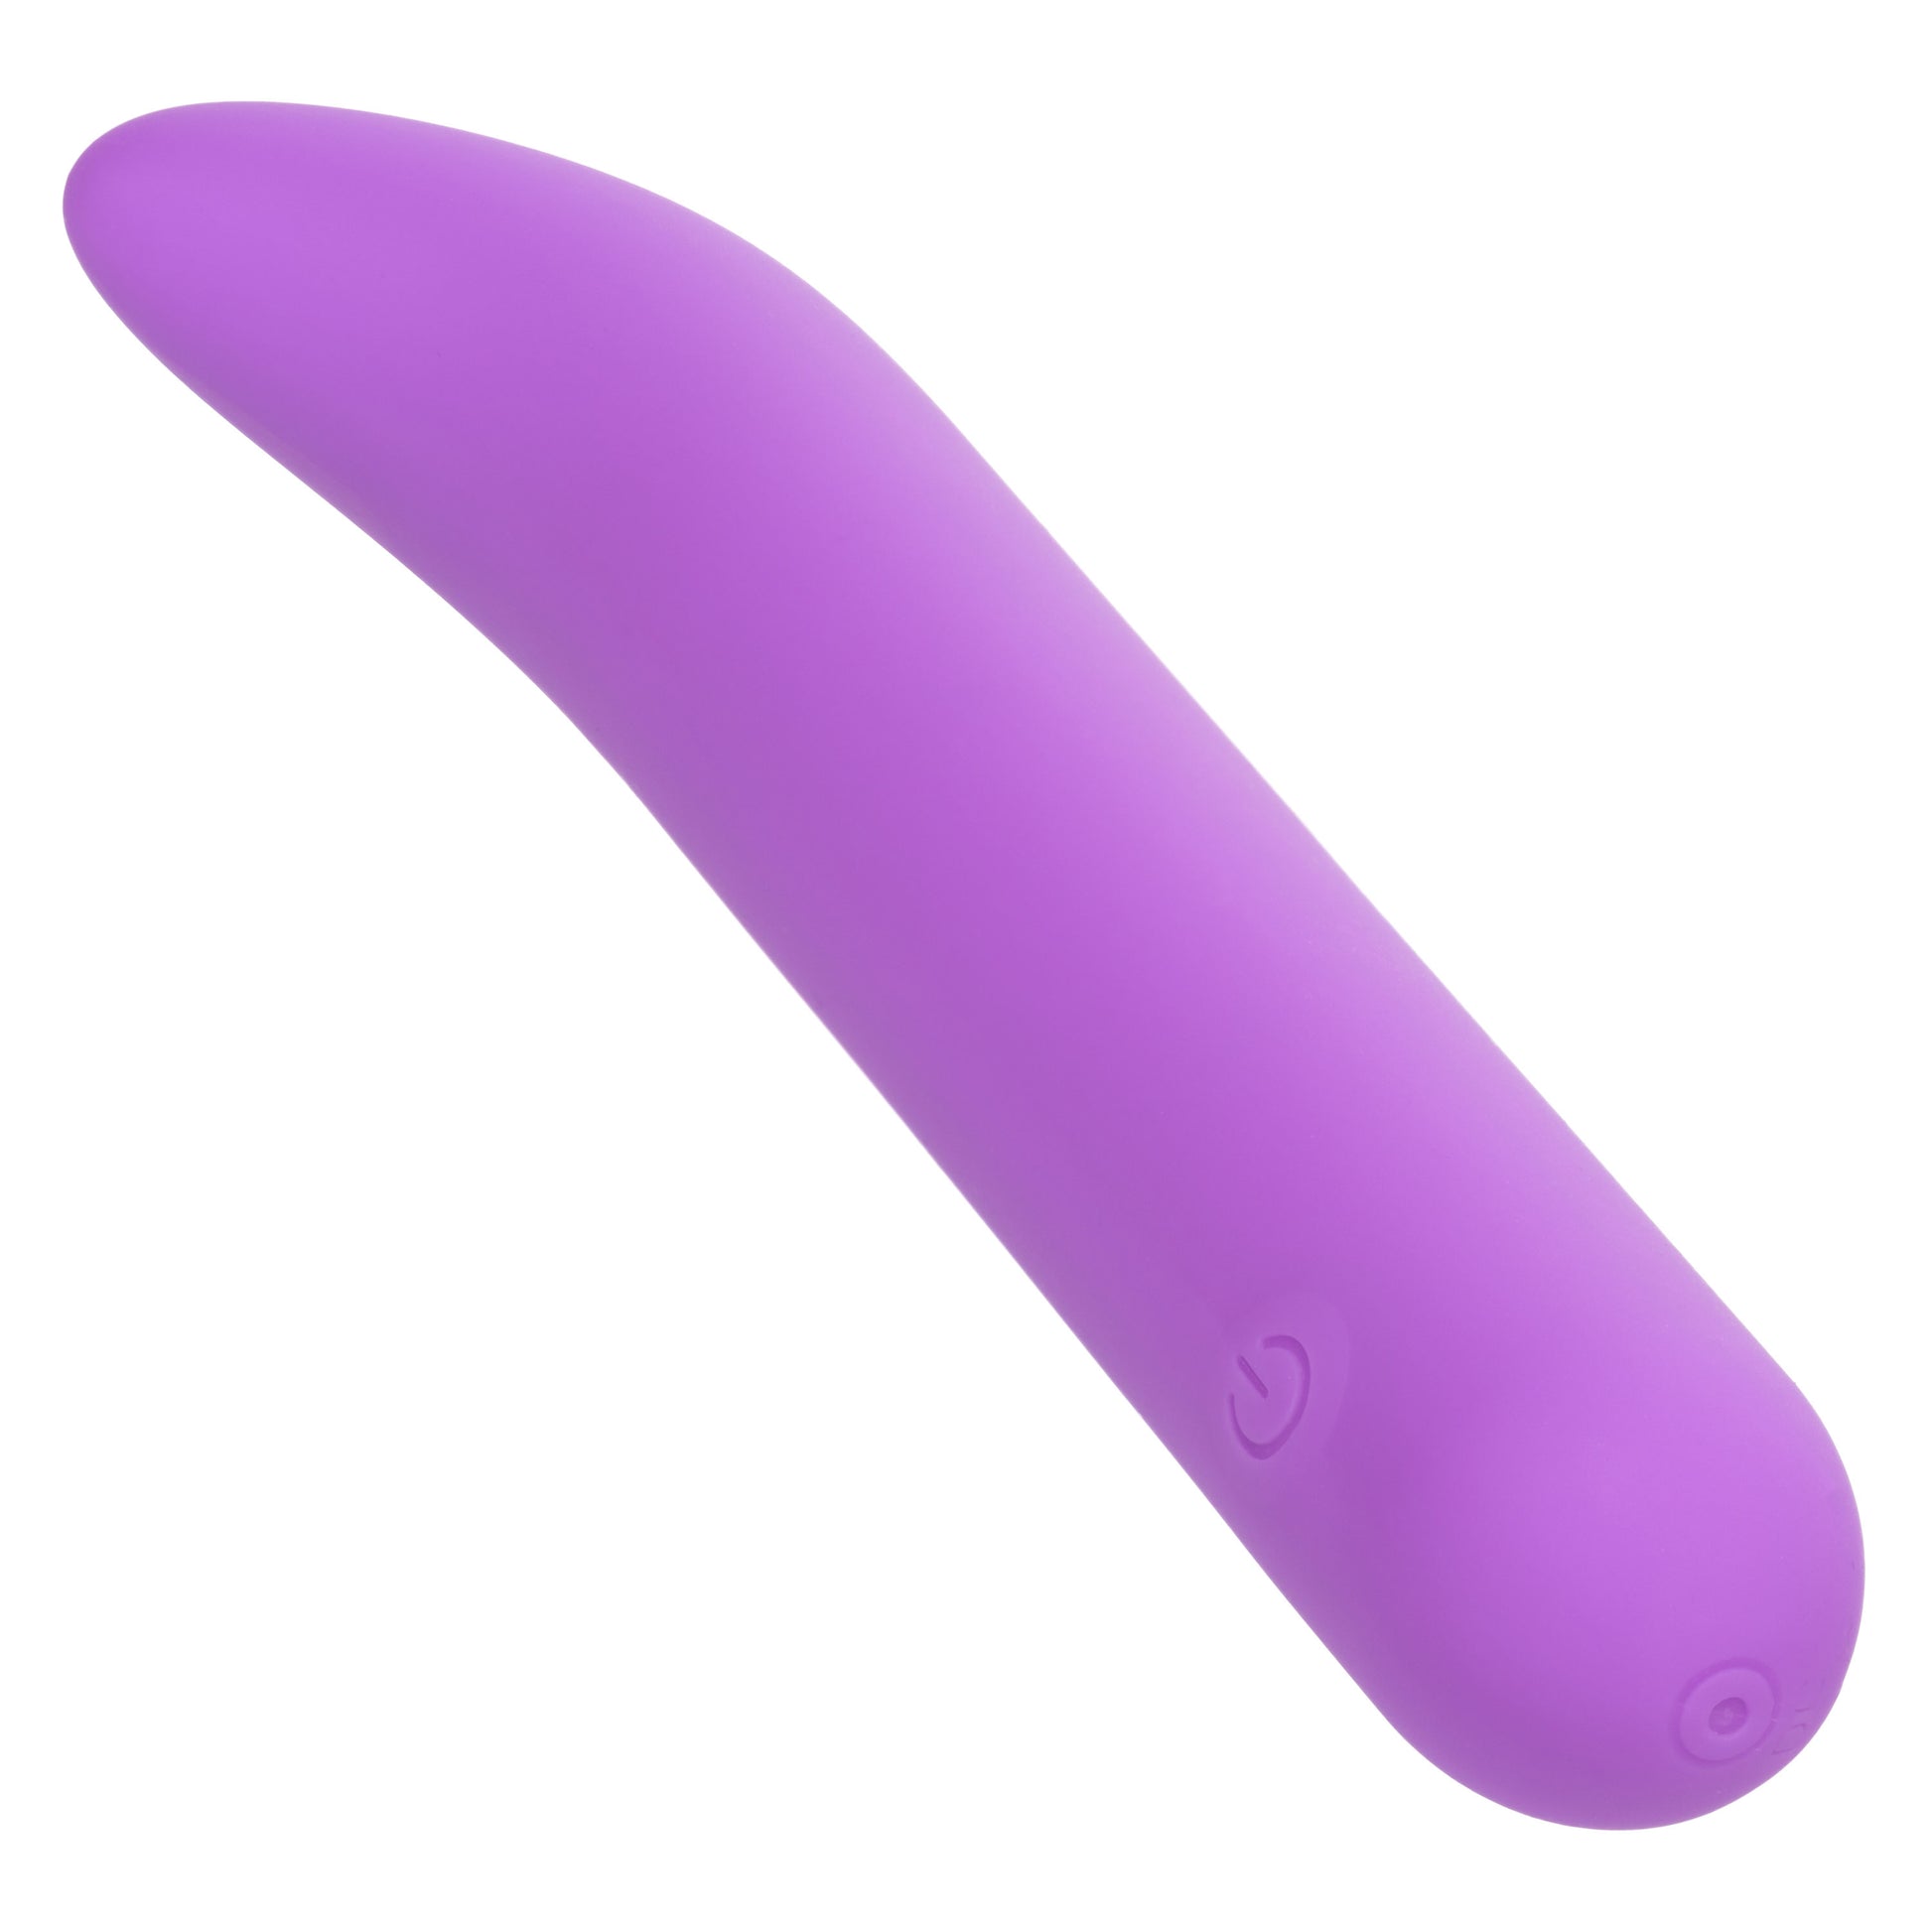 Bliss Liquid Silicone Mini G Vibe - Purple